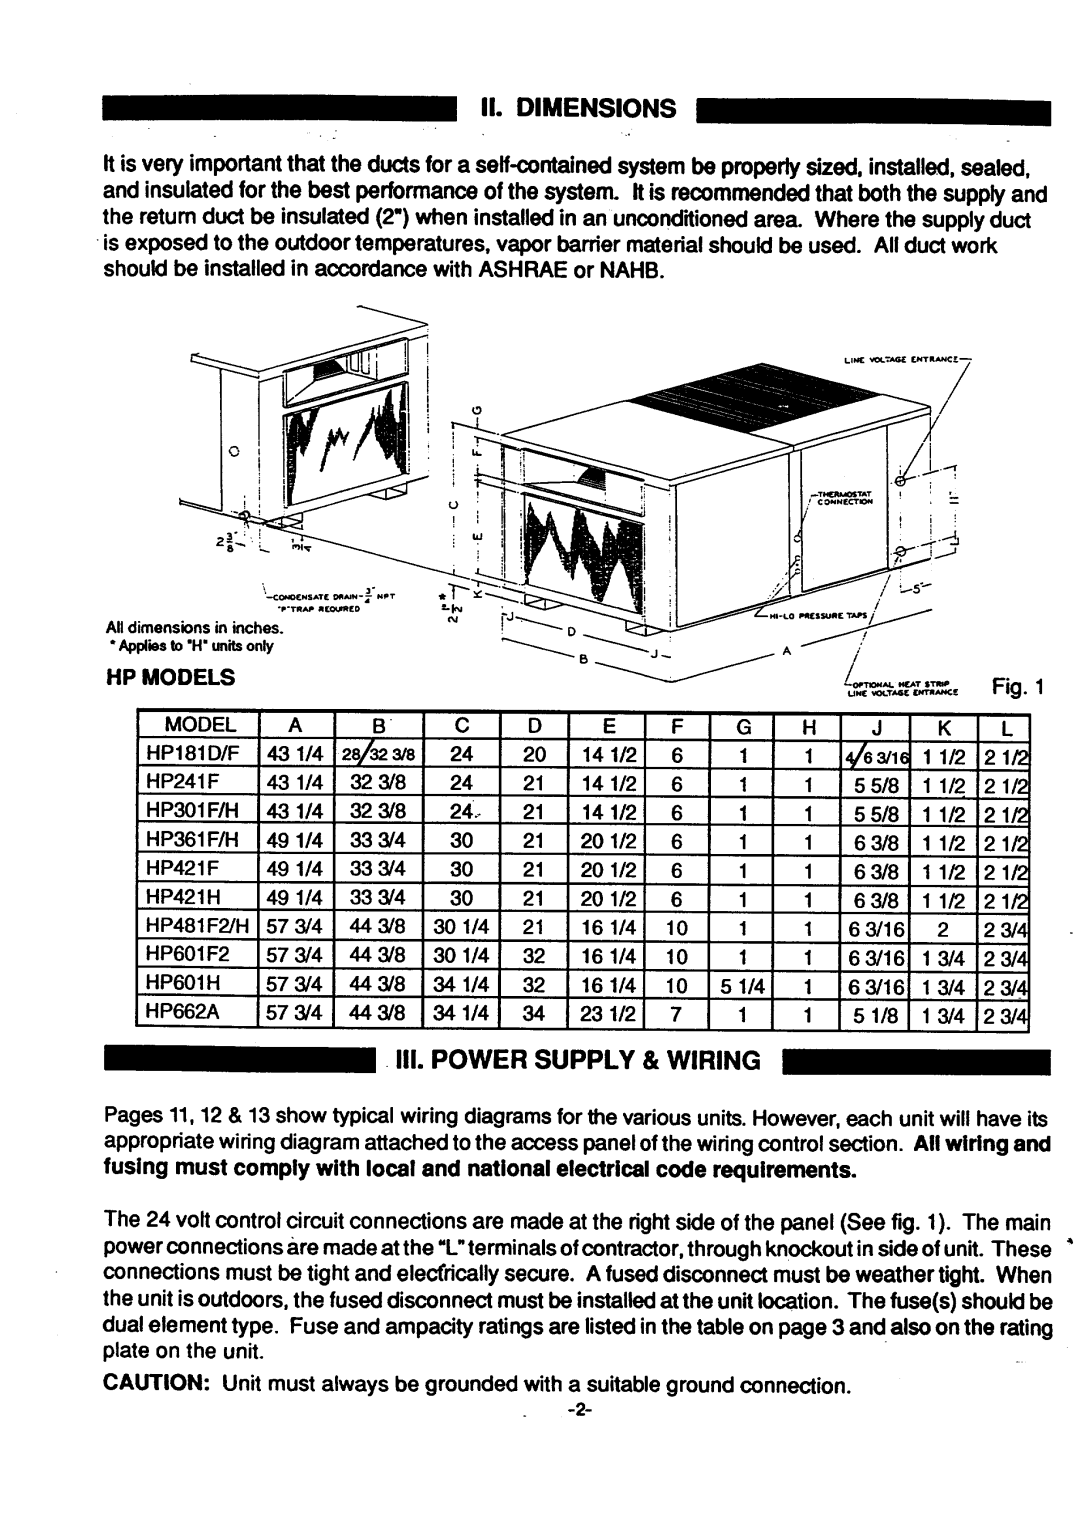 Goetti Air Conditioning Heat Pump manual Iii. Power Supply & Wiring, Ii. Dimensions 